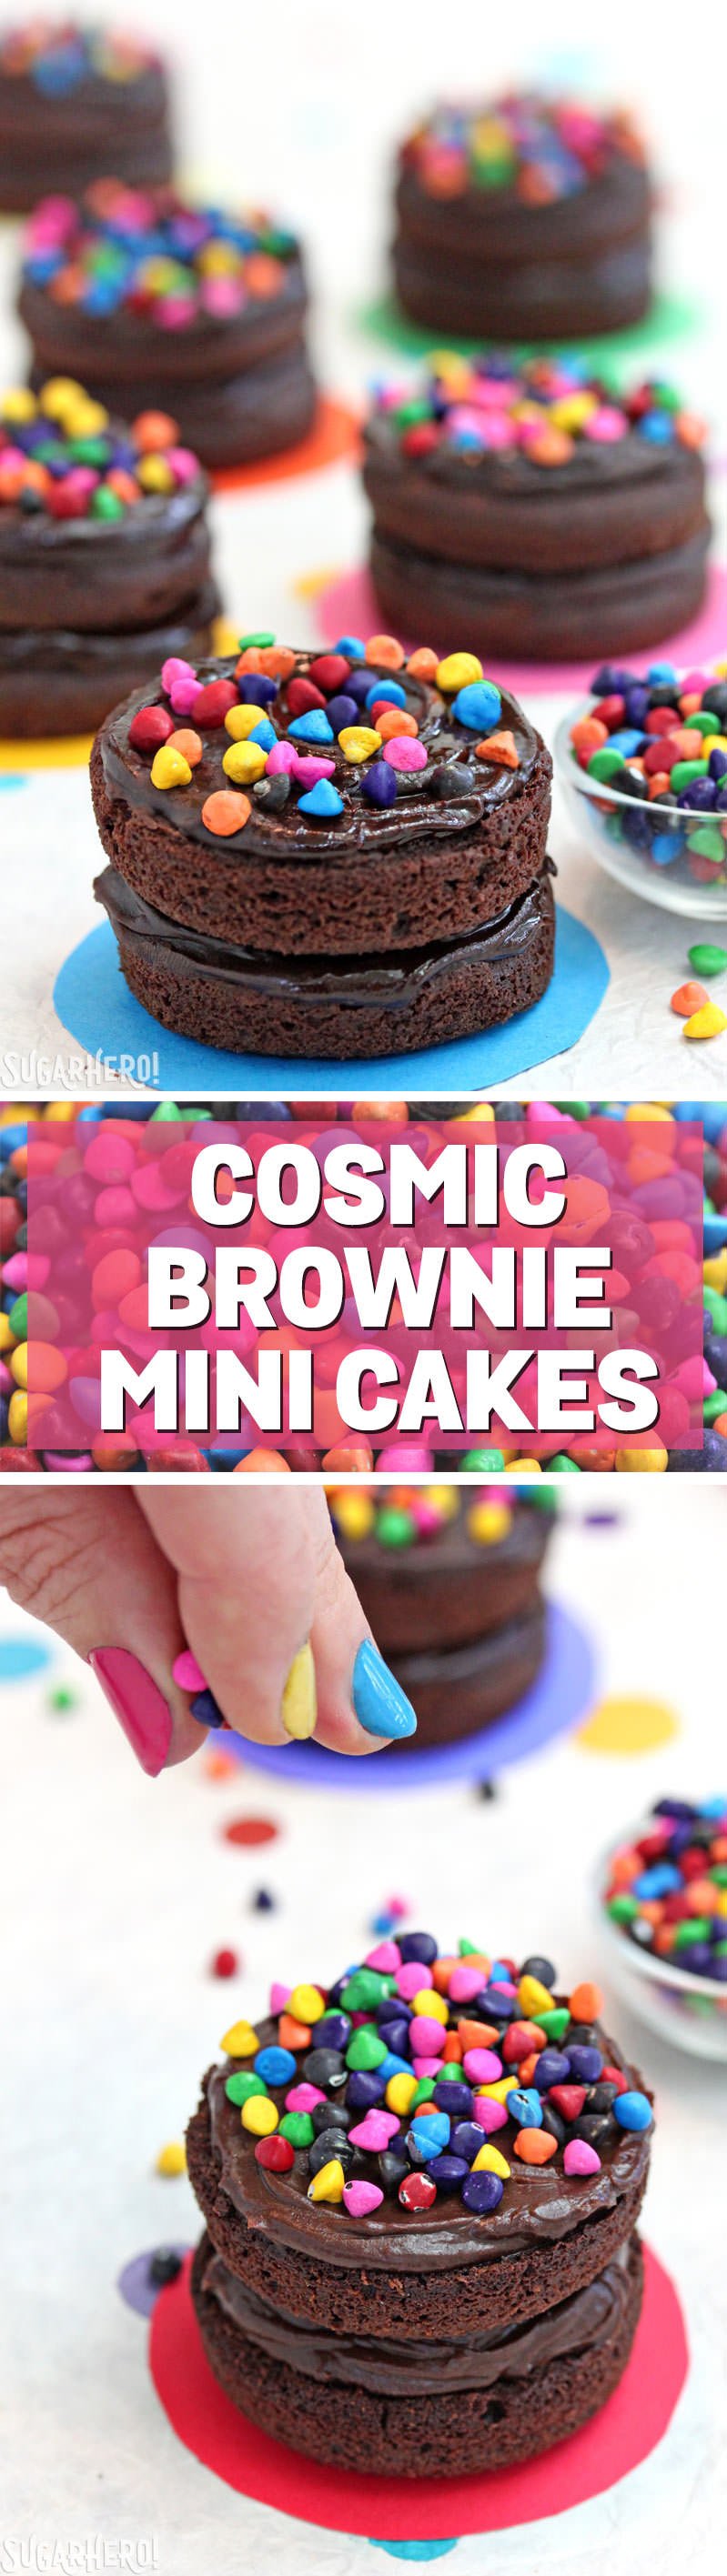 Cosmic Brownie Mini Cakes | From SugarHero.com